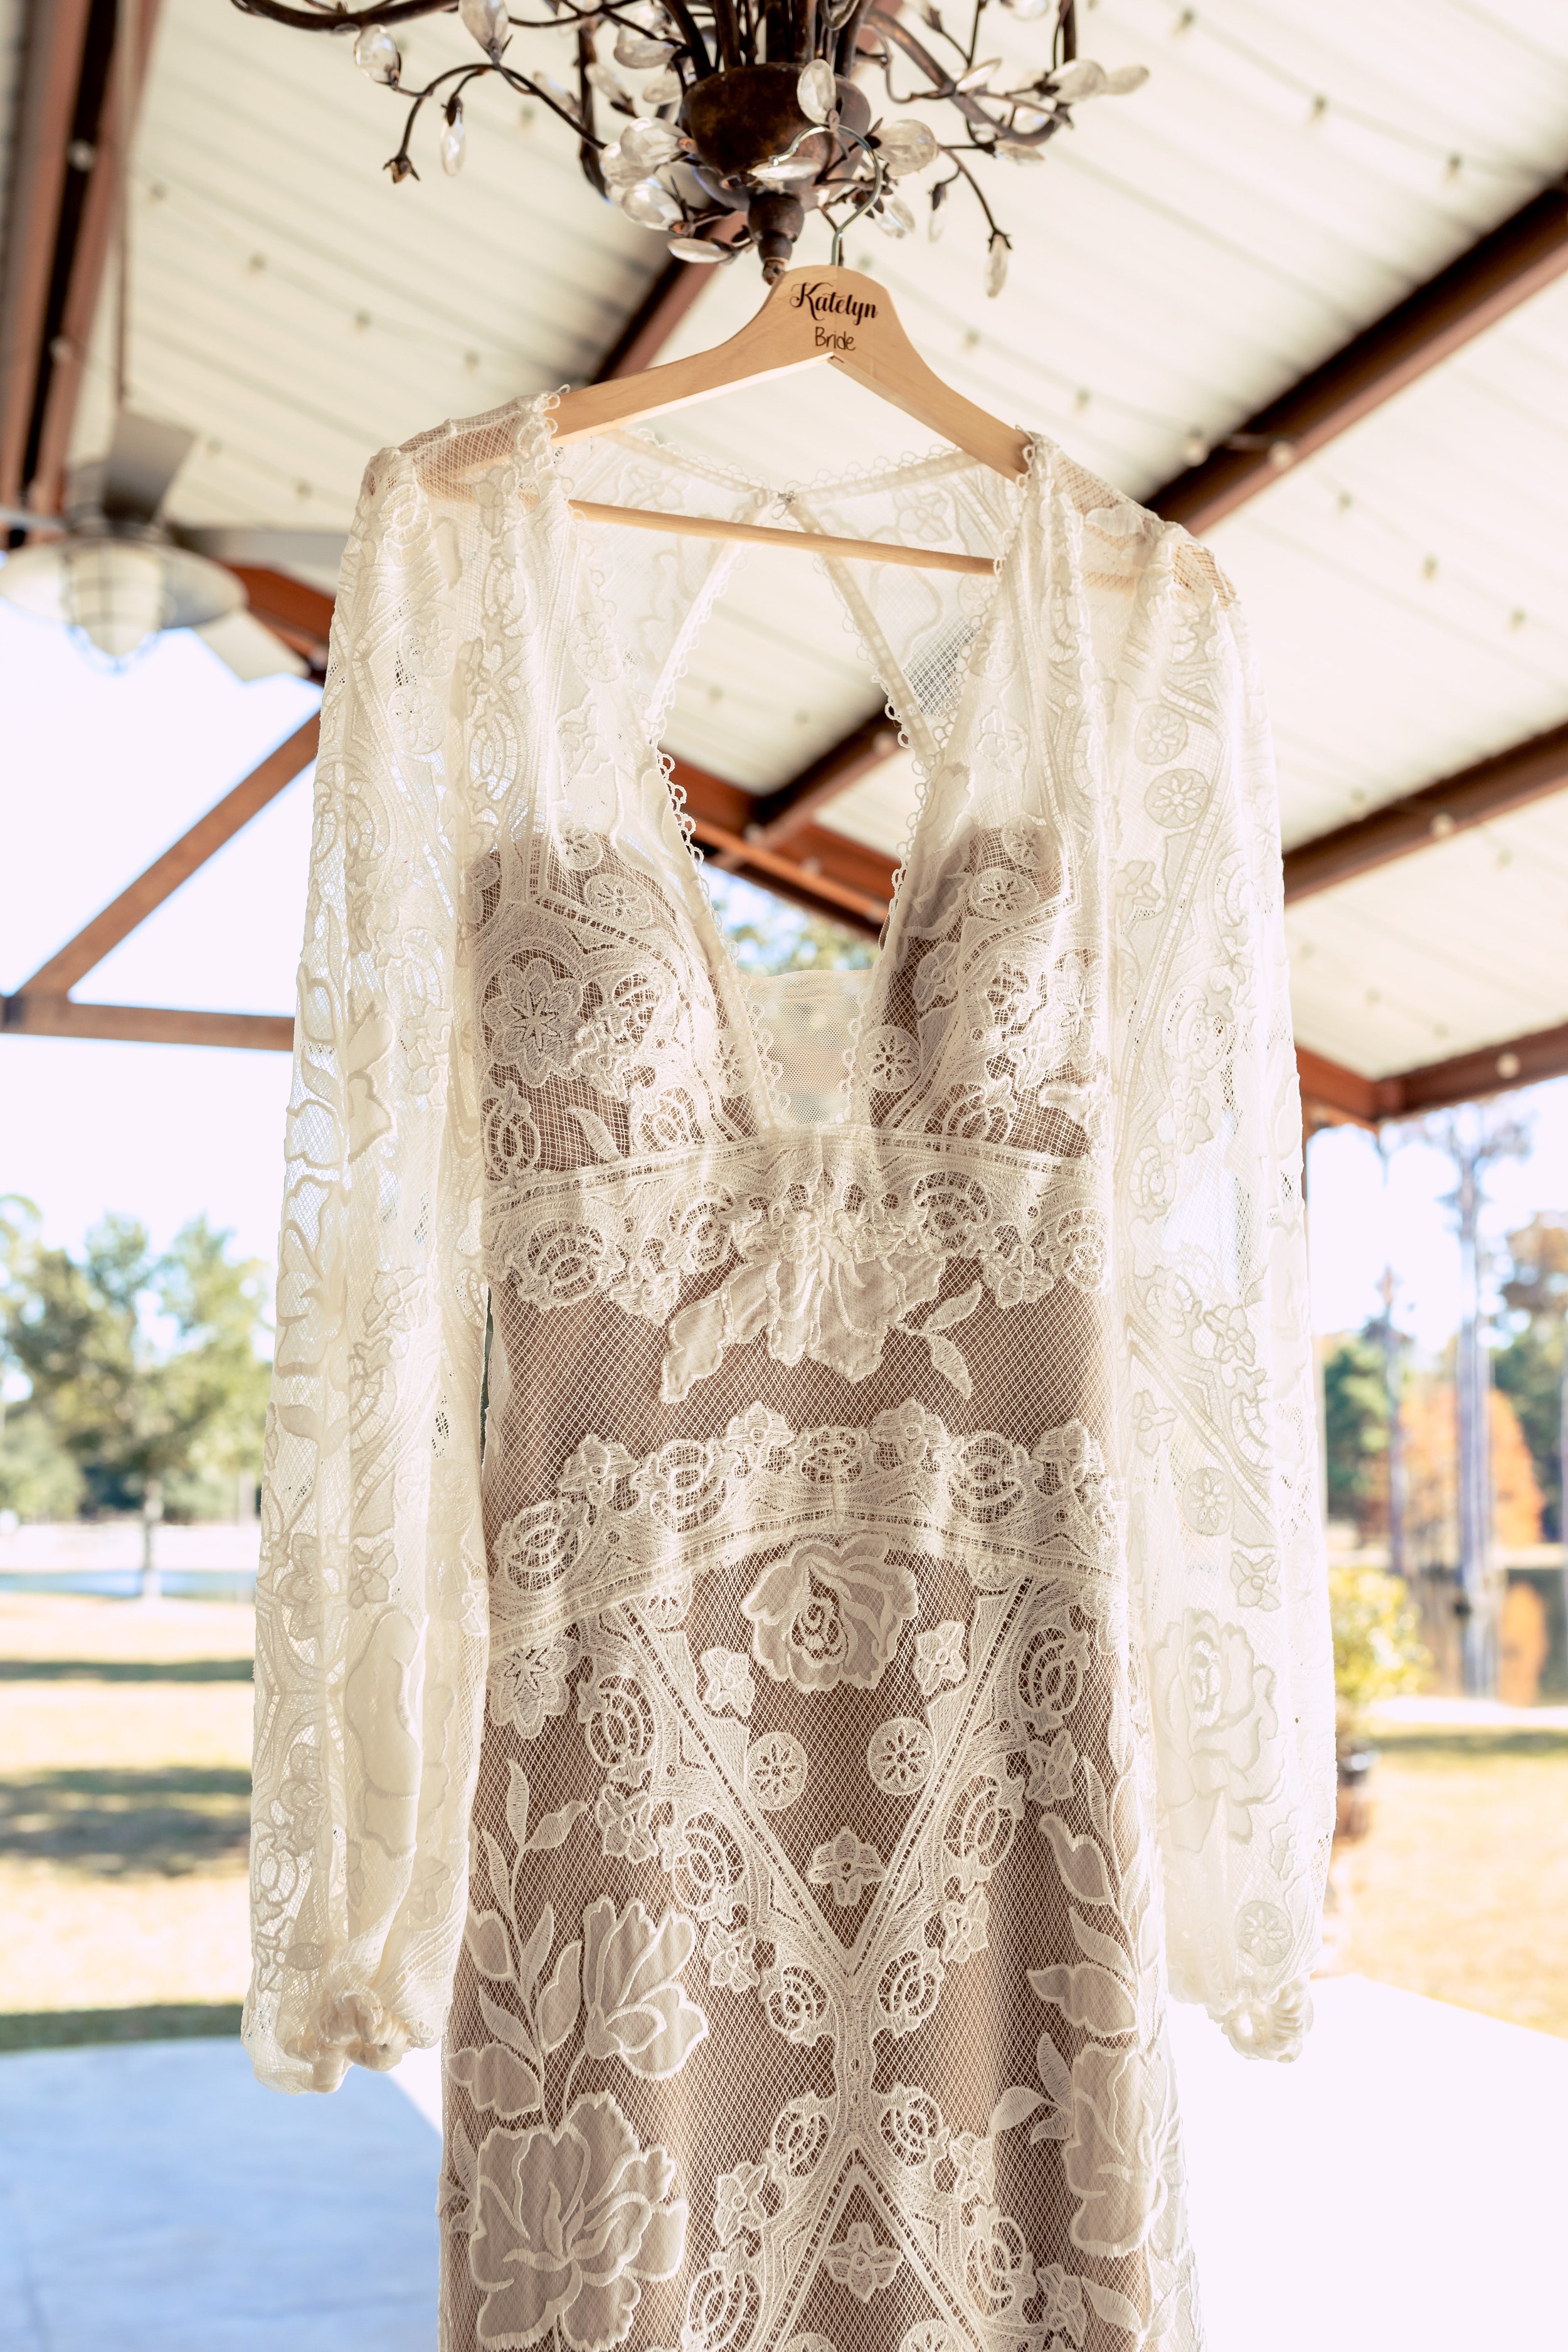 savannah-wedding-moss-oak-farm-willowby-boho-rustic-savannah-bride-wedding-dress-lace-wedding-dress.jpg